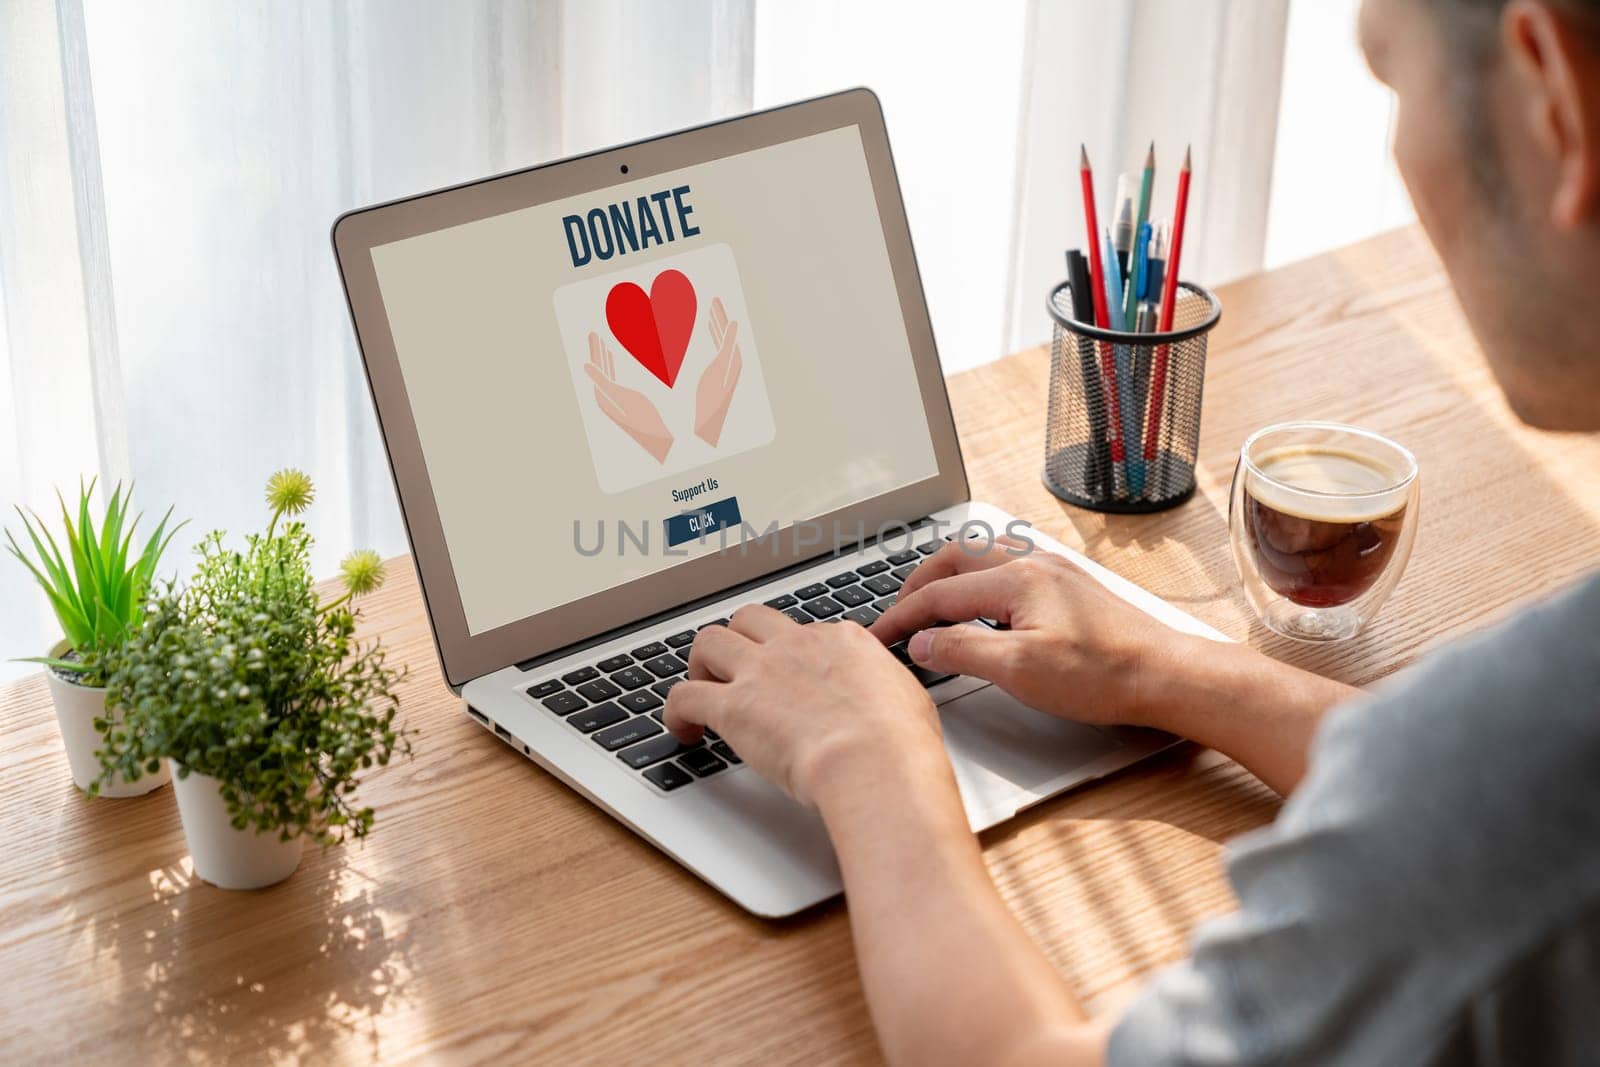 Online donation platform offer modish money sending system by biancoblue